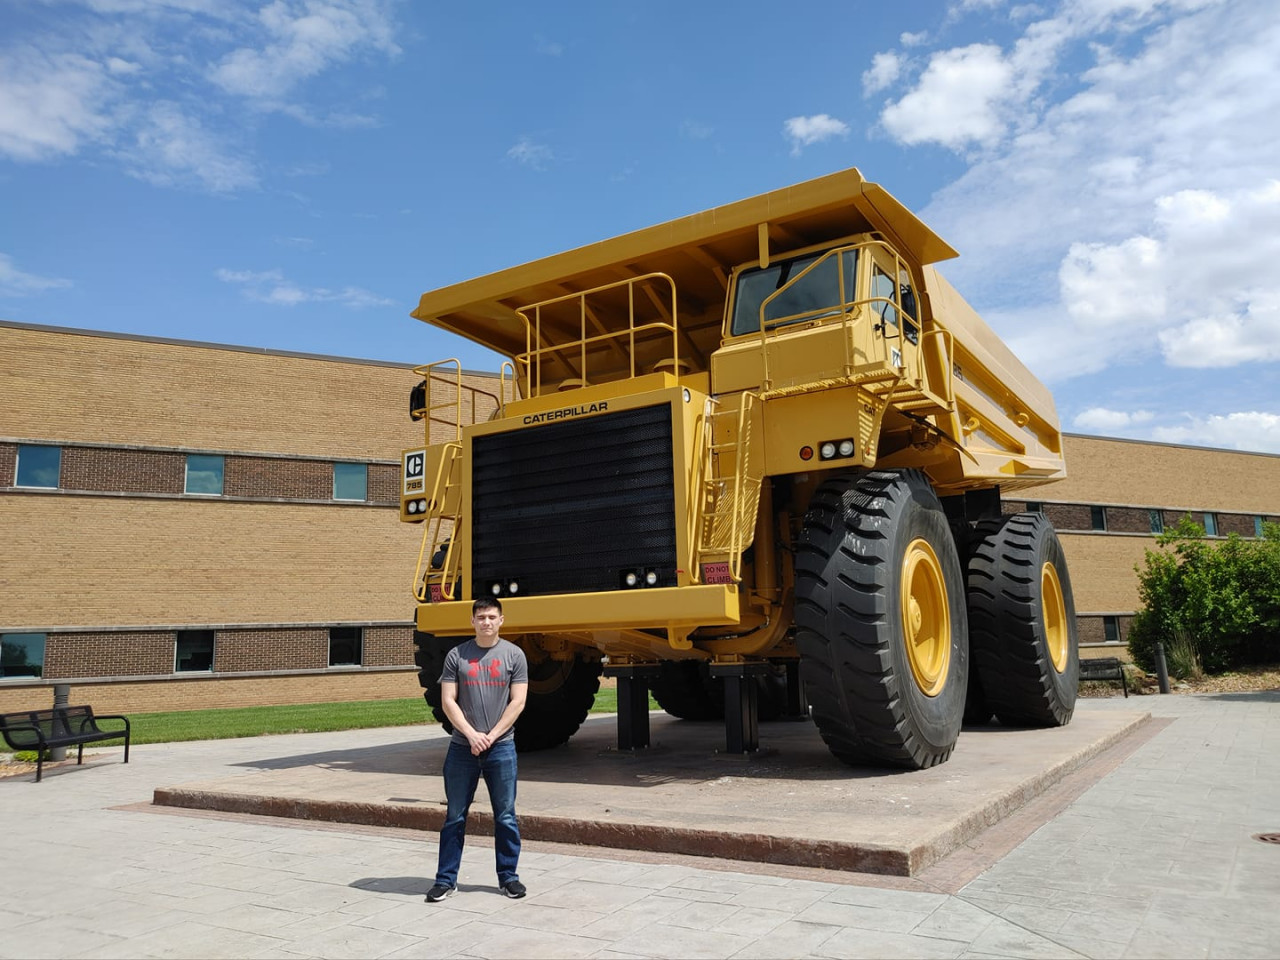 Derek standing in front of a massive Caterpillar dump truck